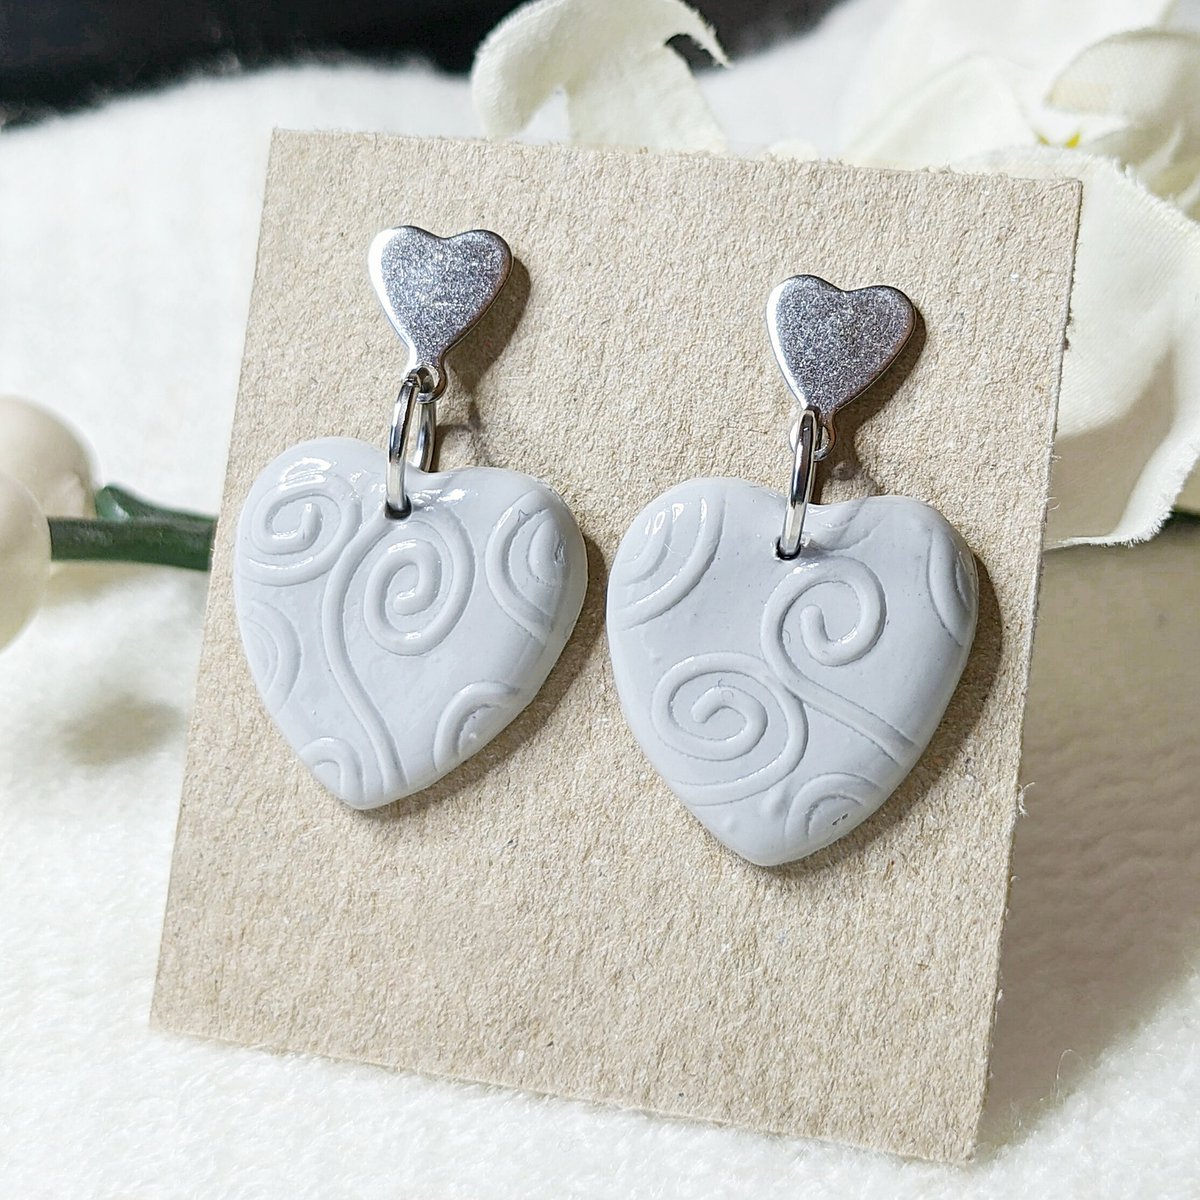 🖤🖤N E W🖤🖤

Swirl effect cool grey heart #earrings.
#handmade from polymer clay 🤗
Free UK P&P 🇬🇧 
numonday.com/product/stud-d…
#UKMakers #smartsocial #craftbuzz #craftbizparty #bizbubble #shopindie #numonday #handmademakers #womeninbiz